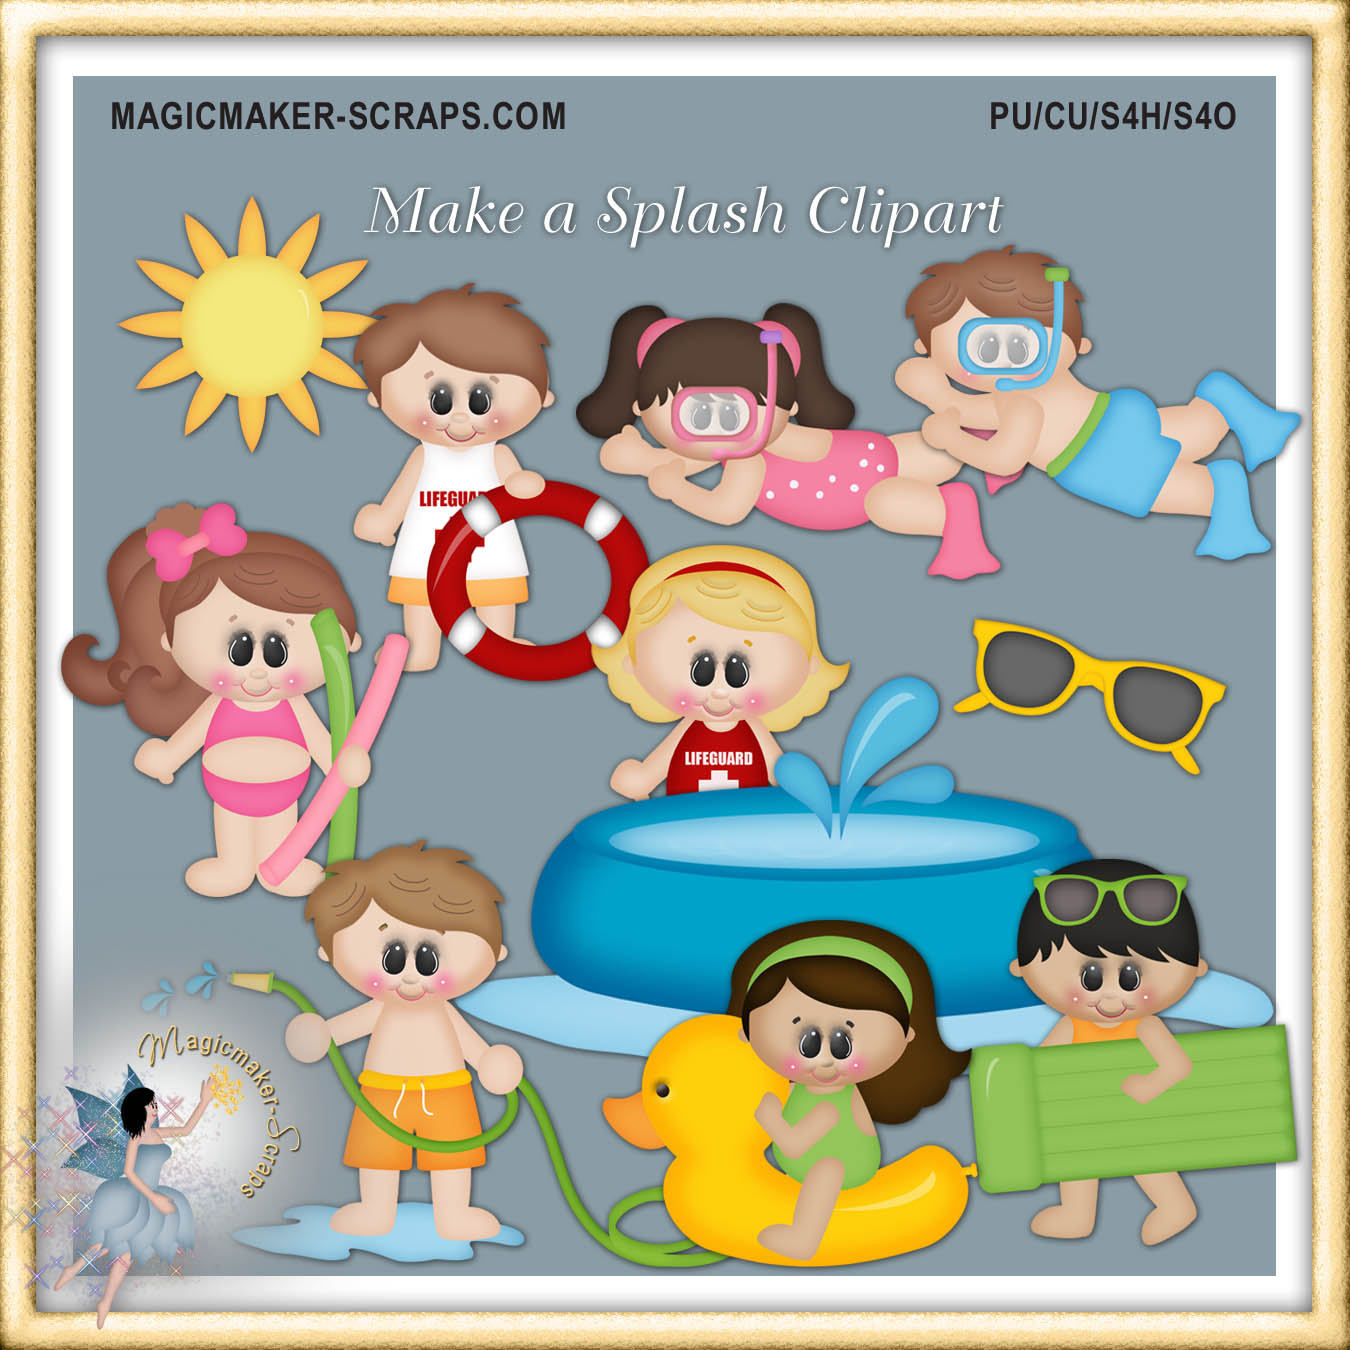 Dog Days Of Summer Clipart    1 00   Magicmaker Scraps Shoppe